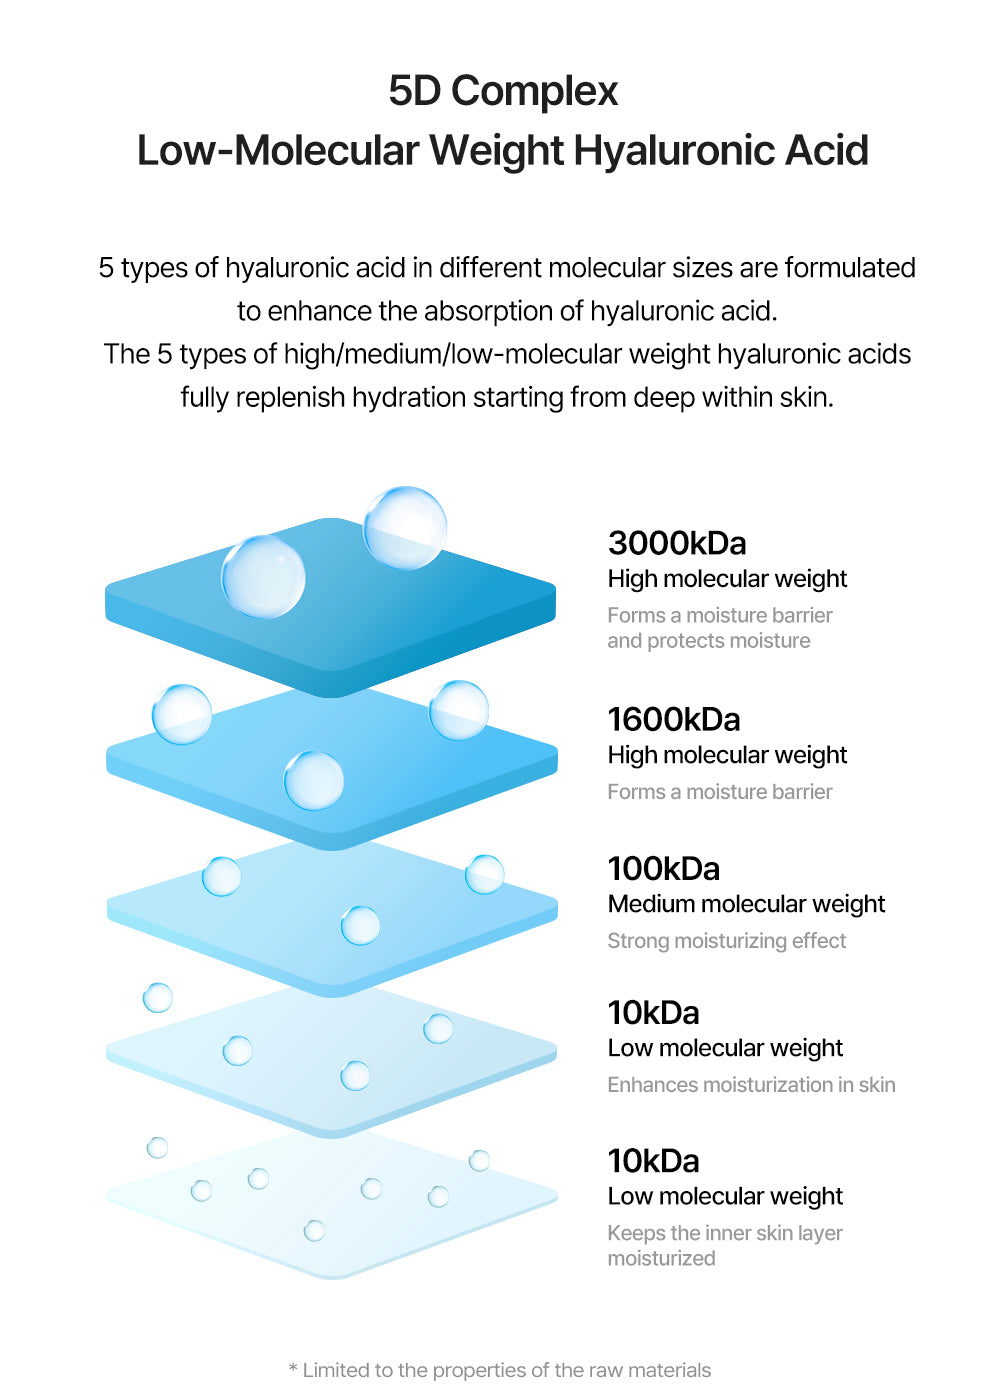 DIVE-IN Low Molecular Hyaluronic Acid Skin Booster